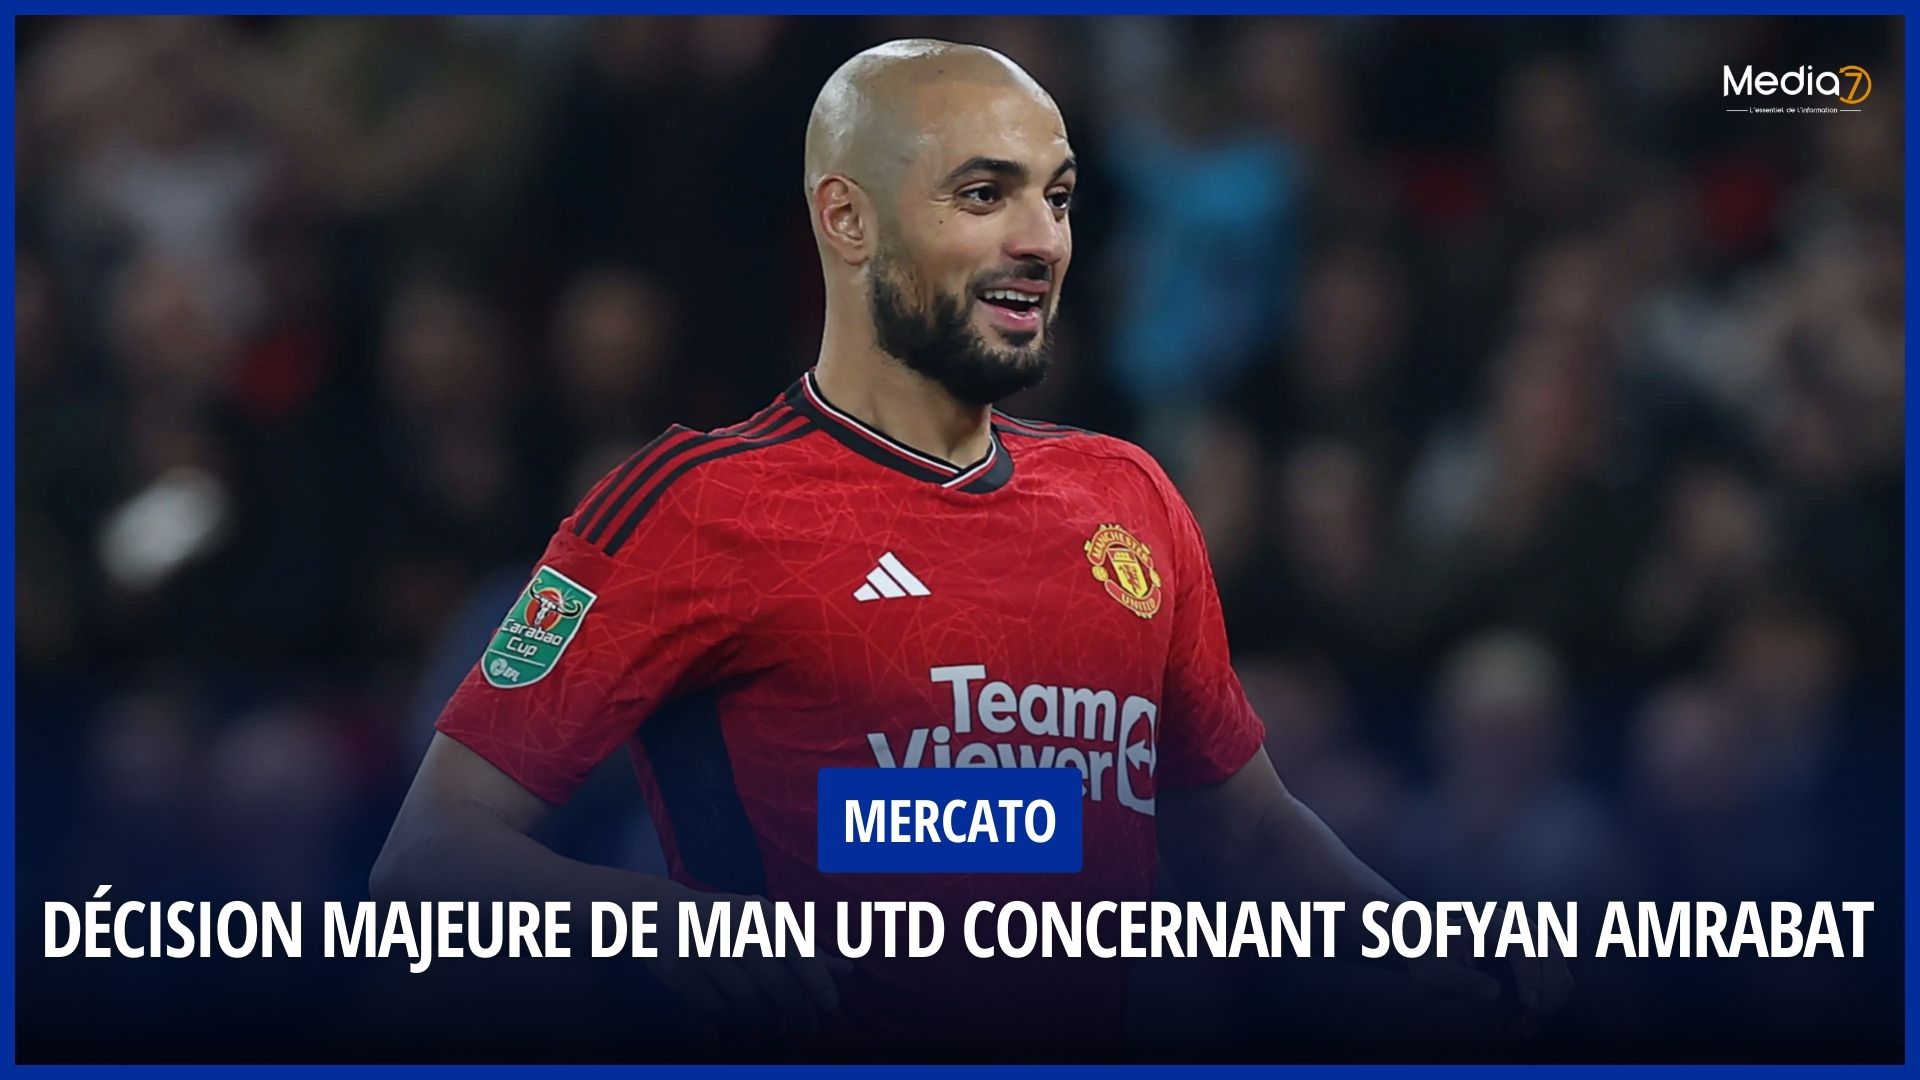 Manchester United's Major Decision Concerning Sofyan Amrabat Before CAN - Media7